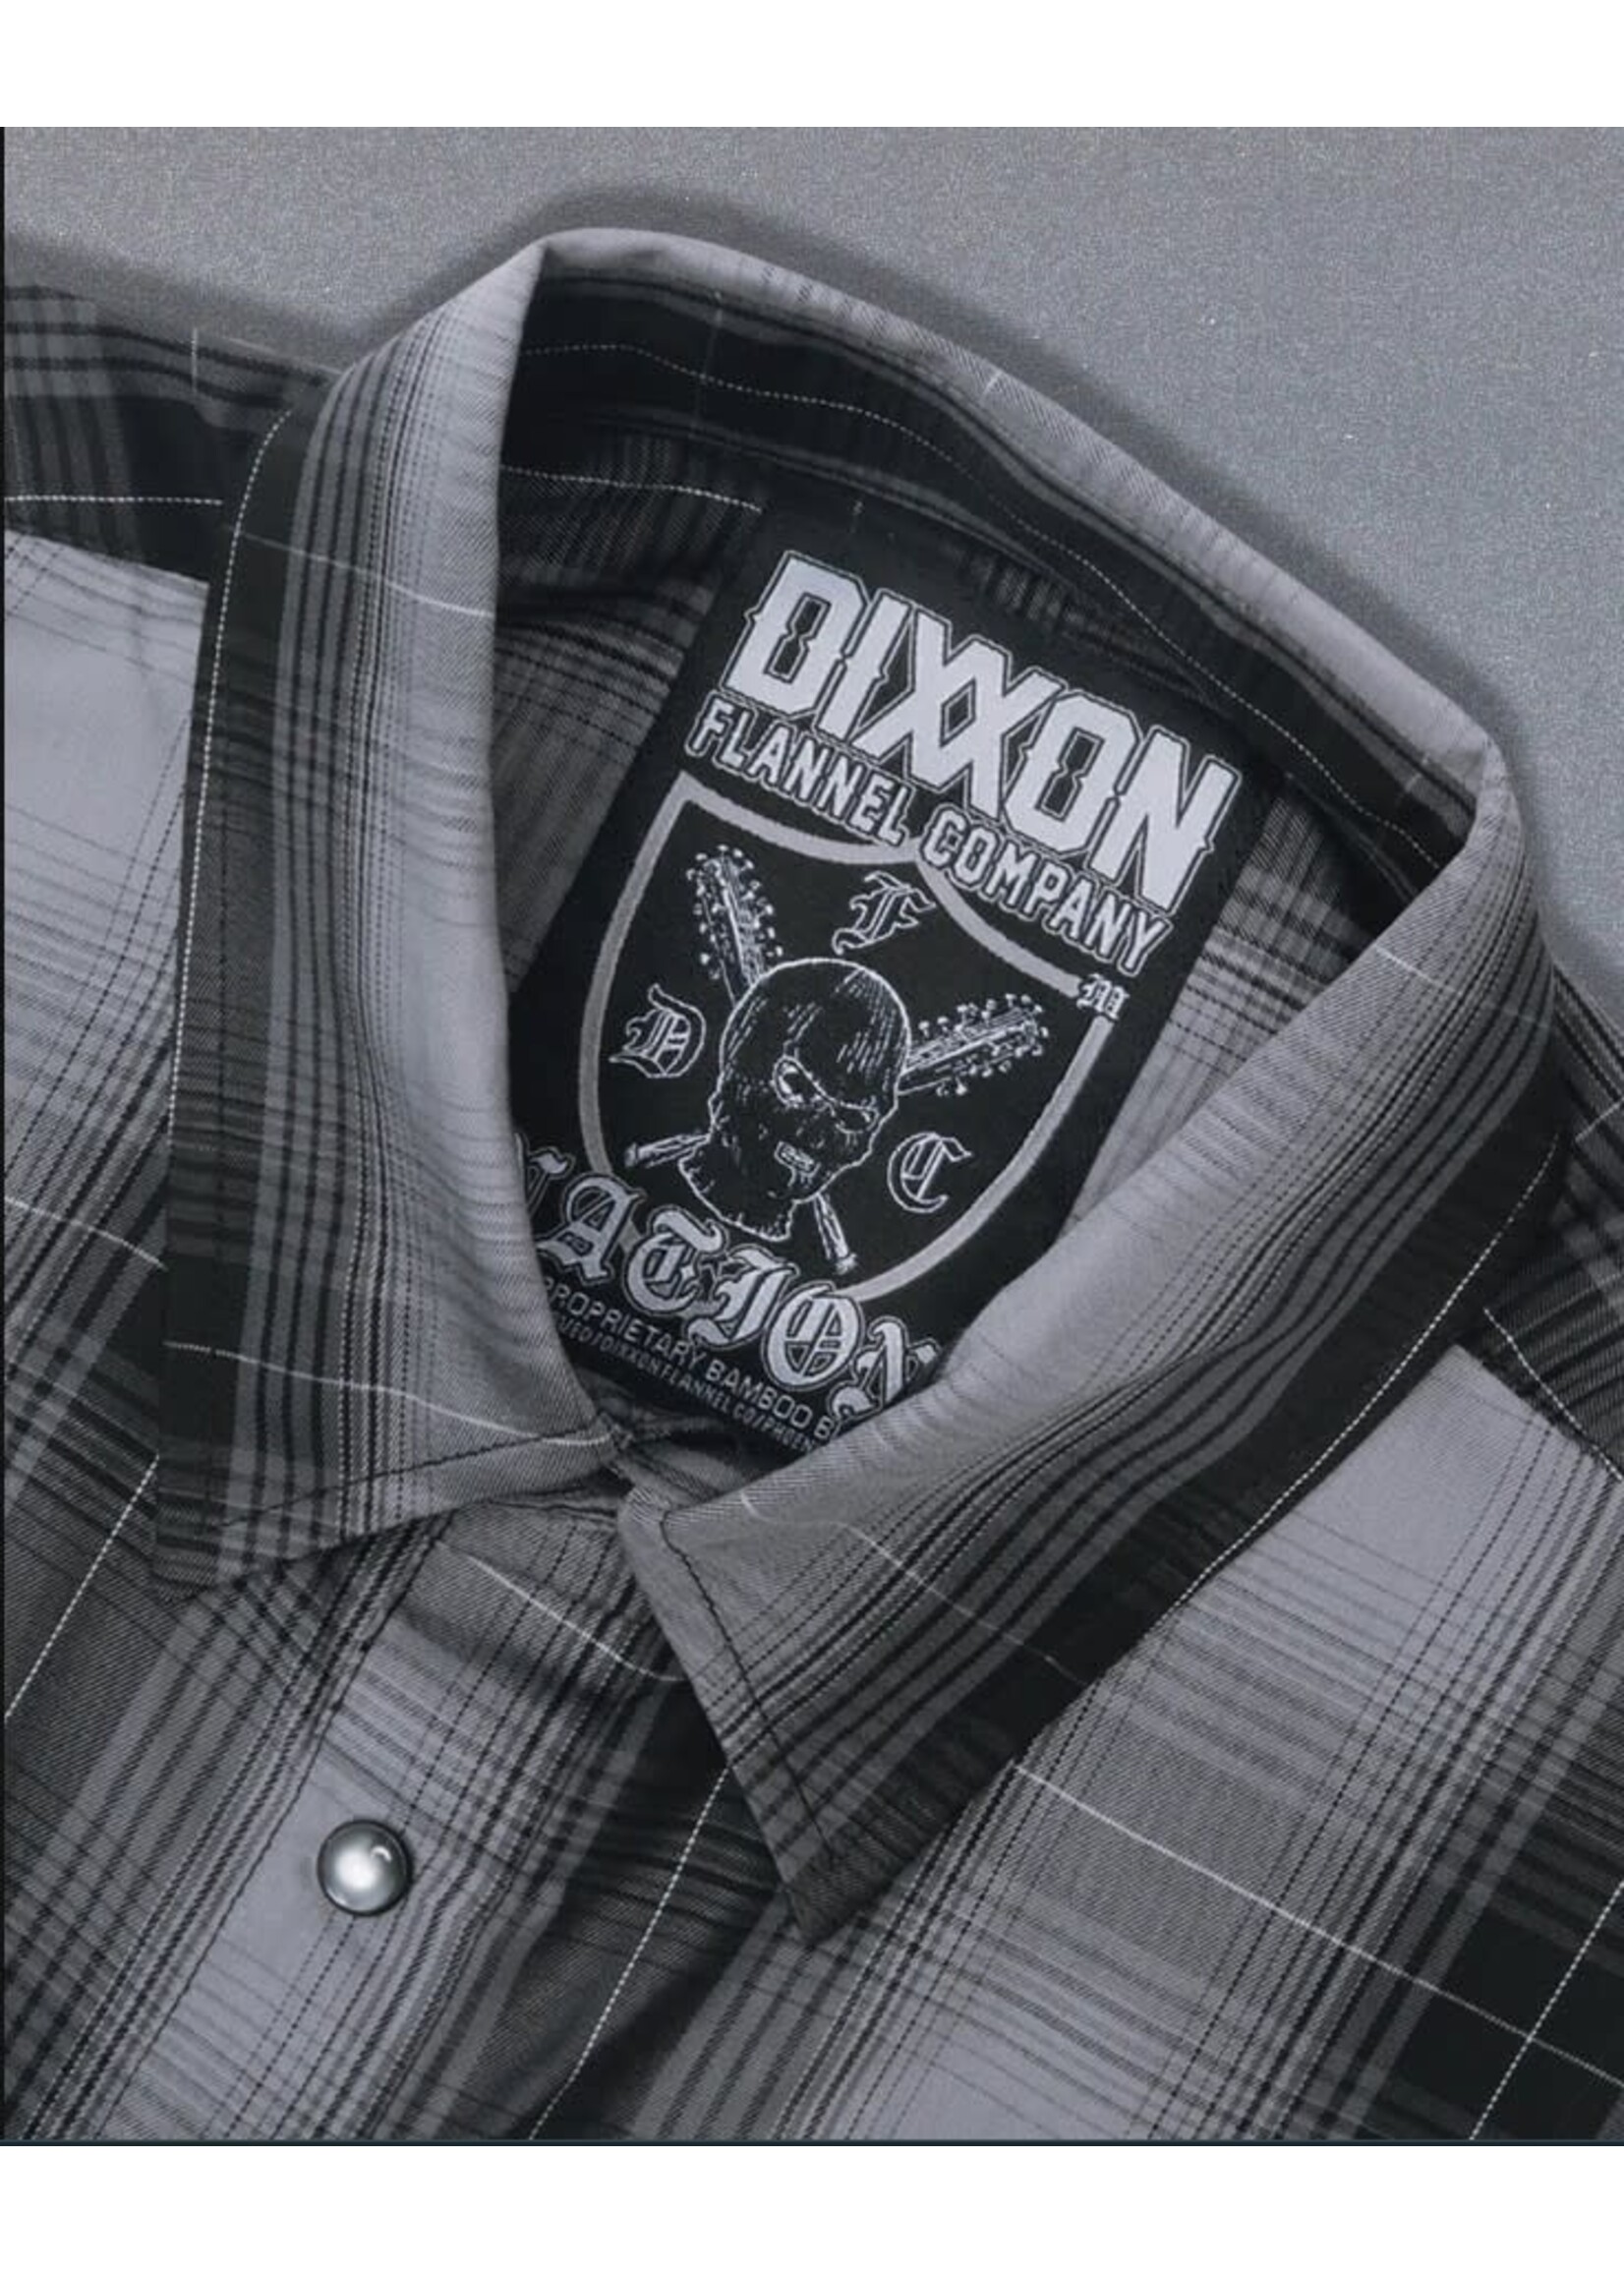 Dixxon Dixxon Nation Bamboo SS